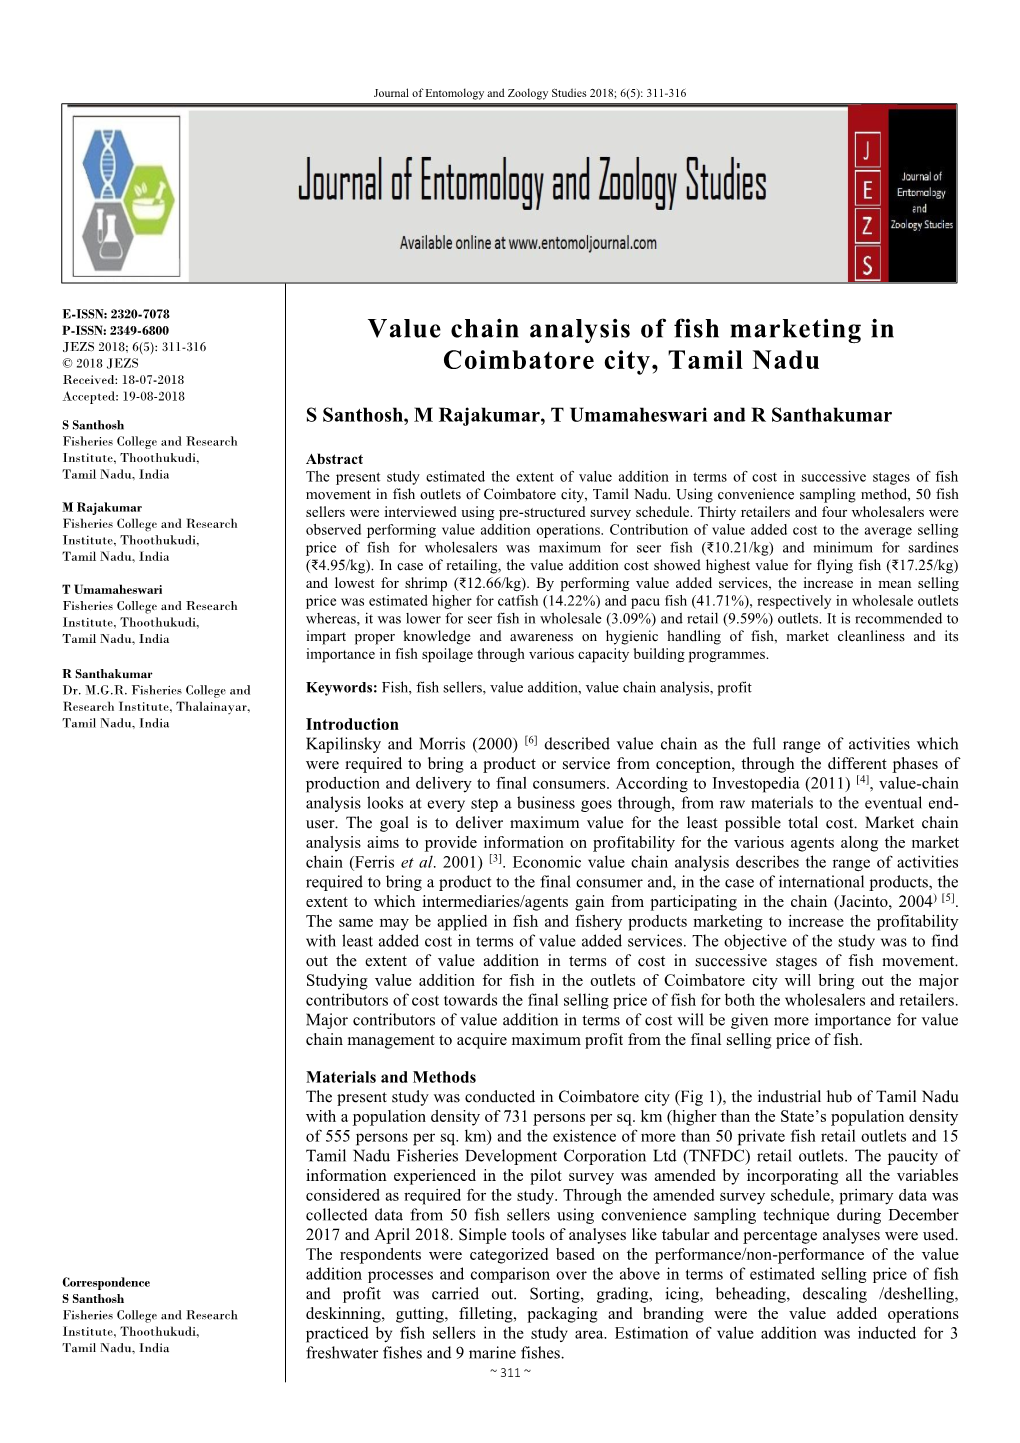 Value Chain Analysis of Fish Marketing in Coimbatore City, Tamil Nadu